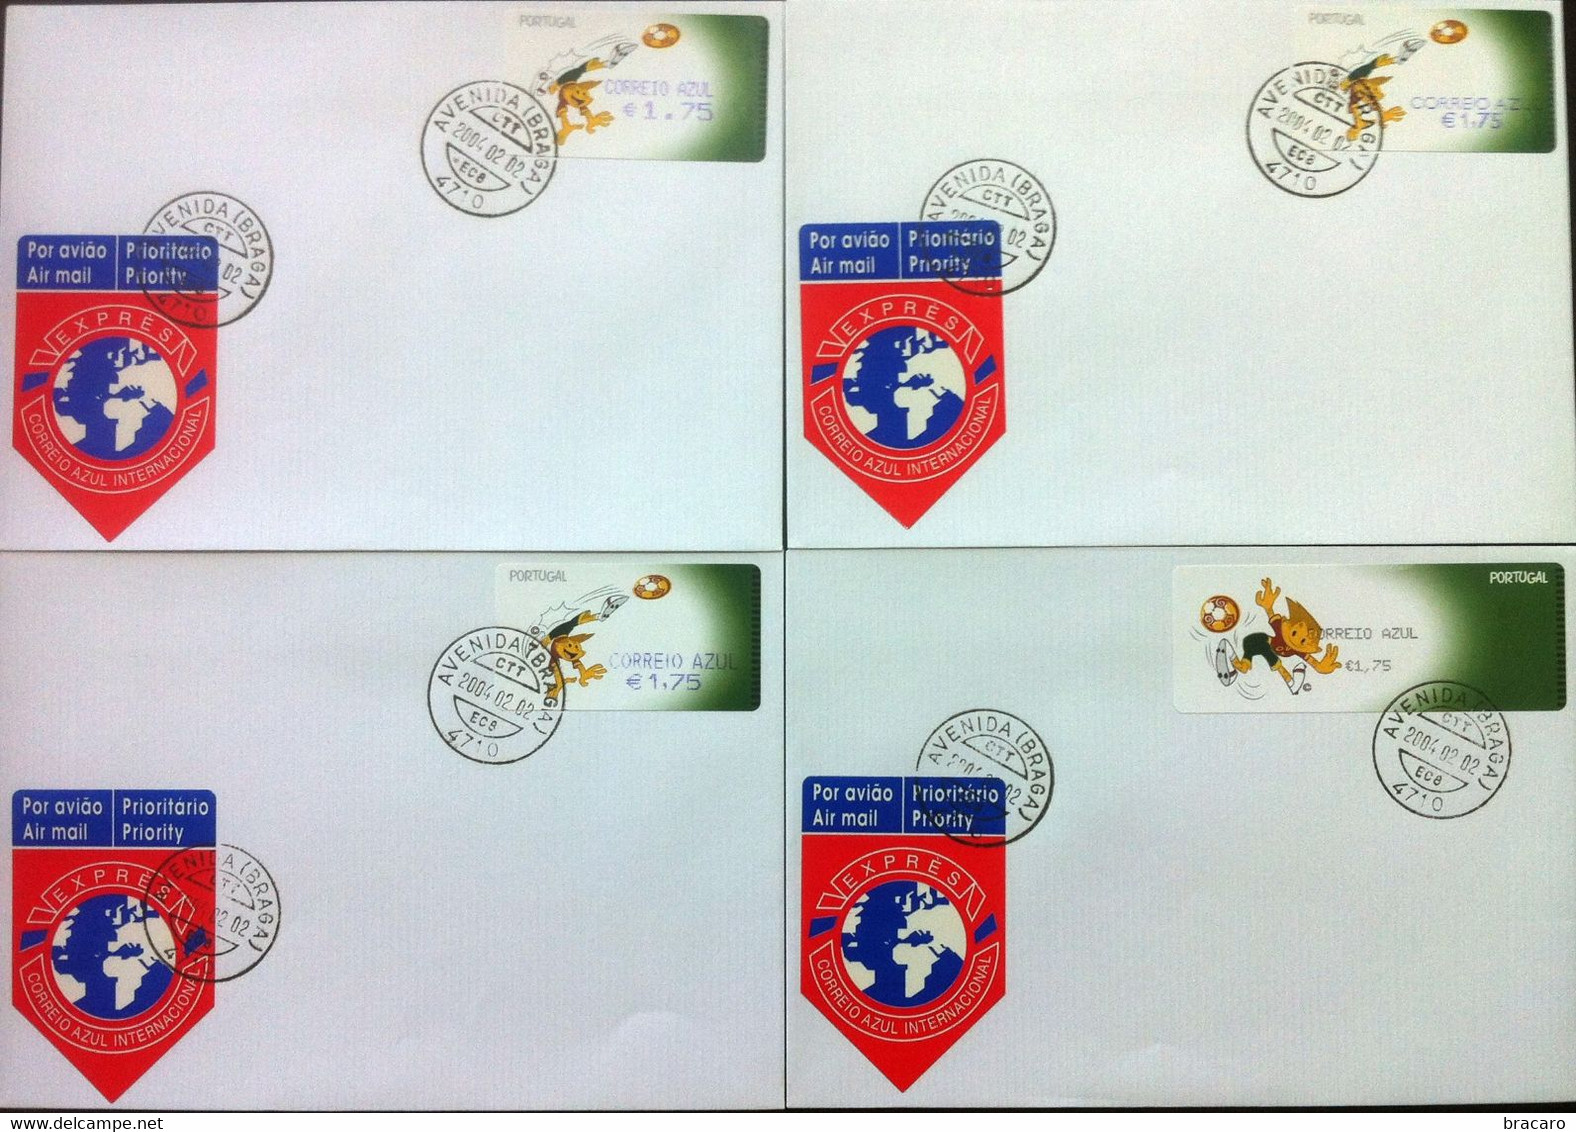 Portugal - ATM Machine Stamps - Cover X 8 - EURO'04 2004 (futebol / Football) - CORREIO AZUL, Cancel Braga - Machines à Affranchir (EMA)